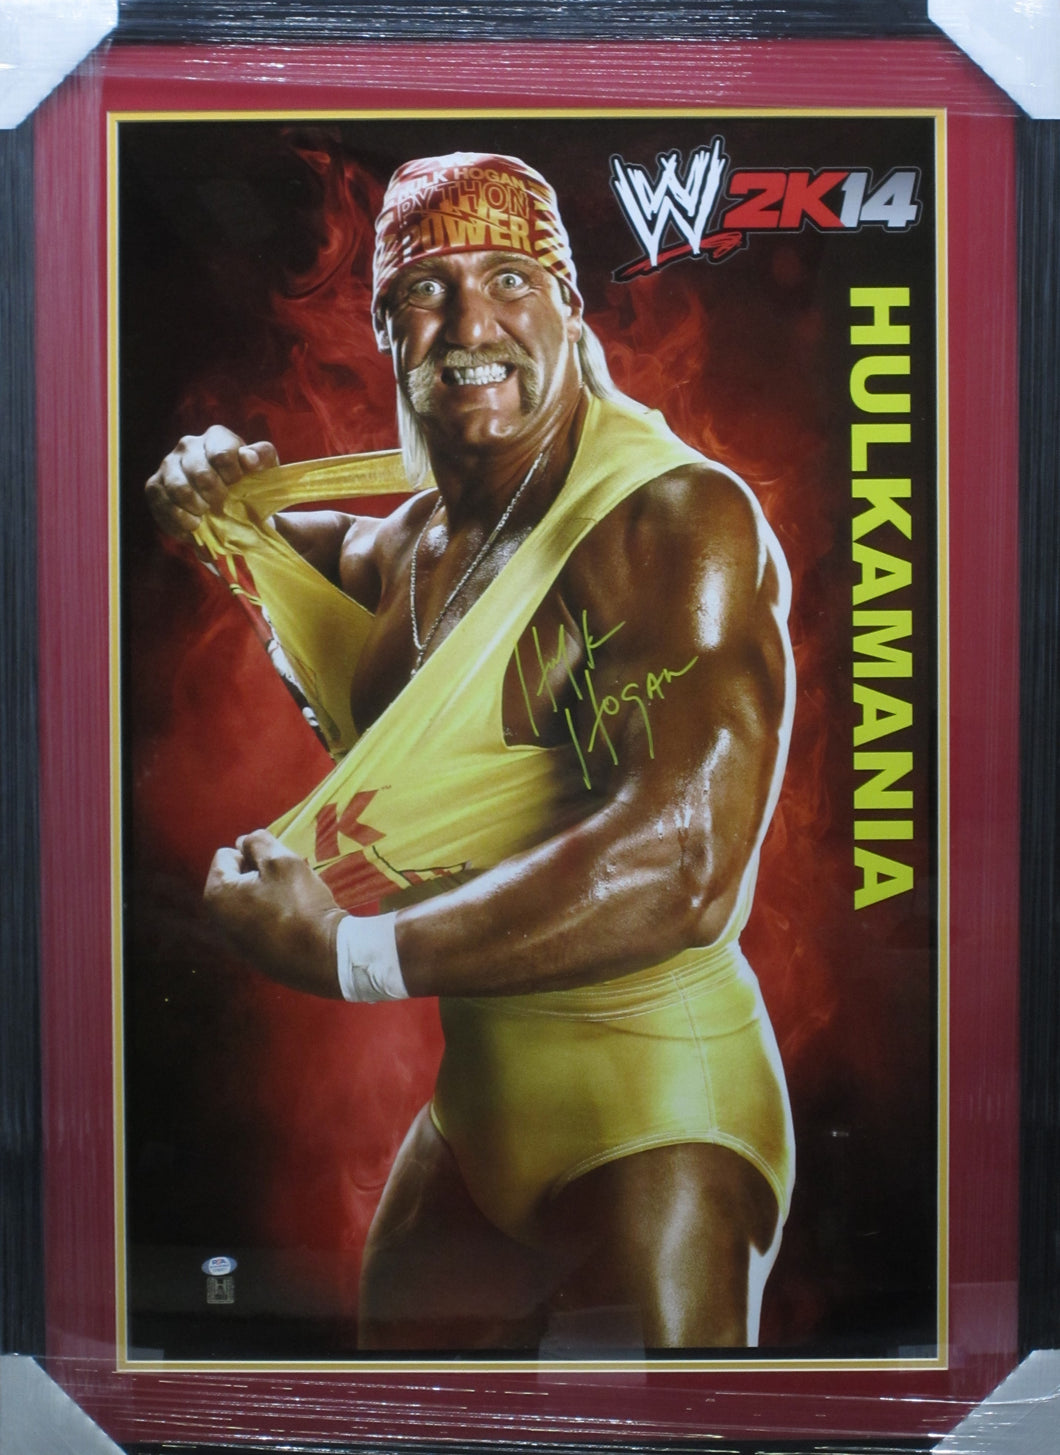 American Professional Wrestler Hulk Hogan Signed WWE 2K14 Poster Framed & Matted with PSA COA